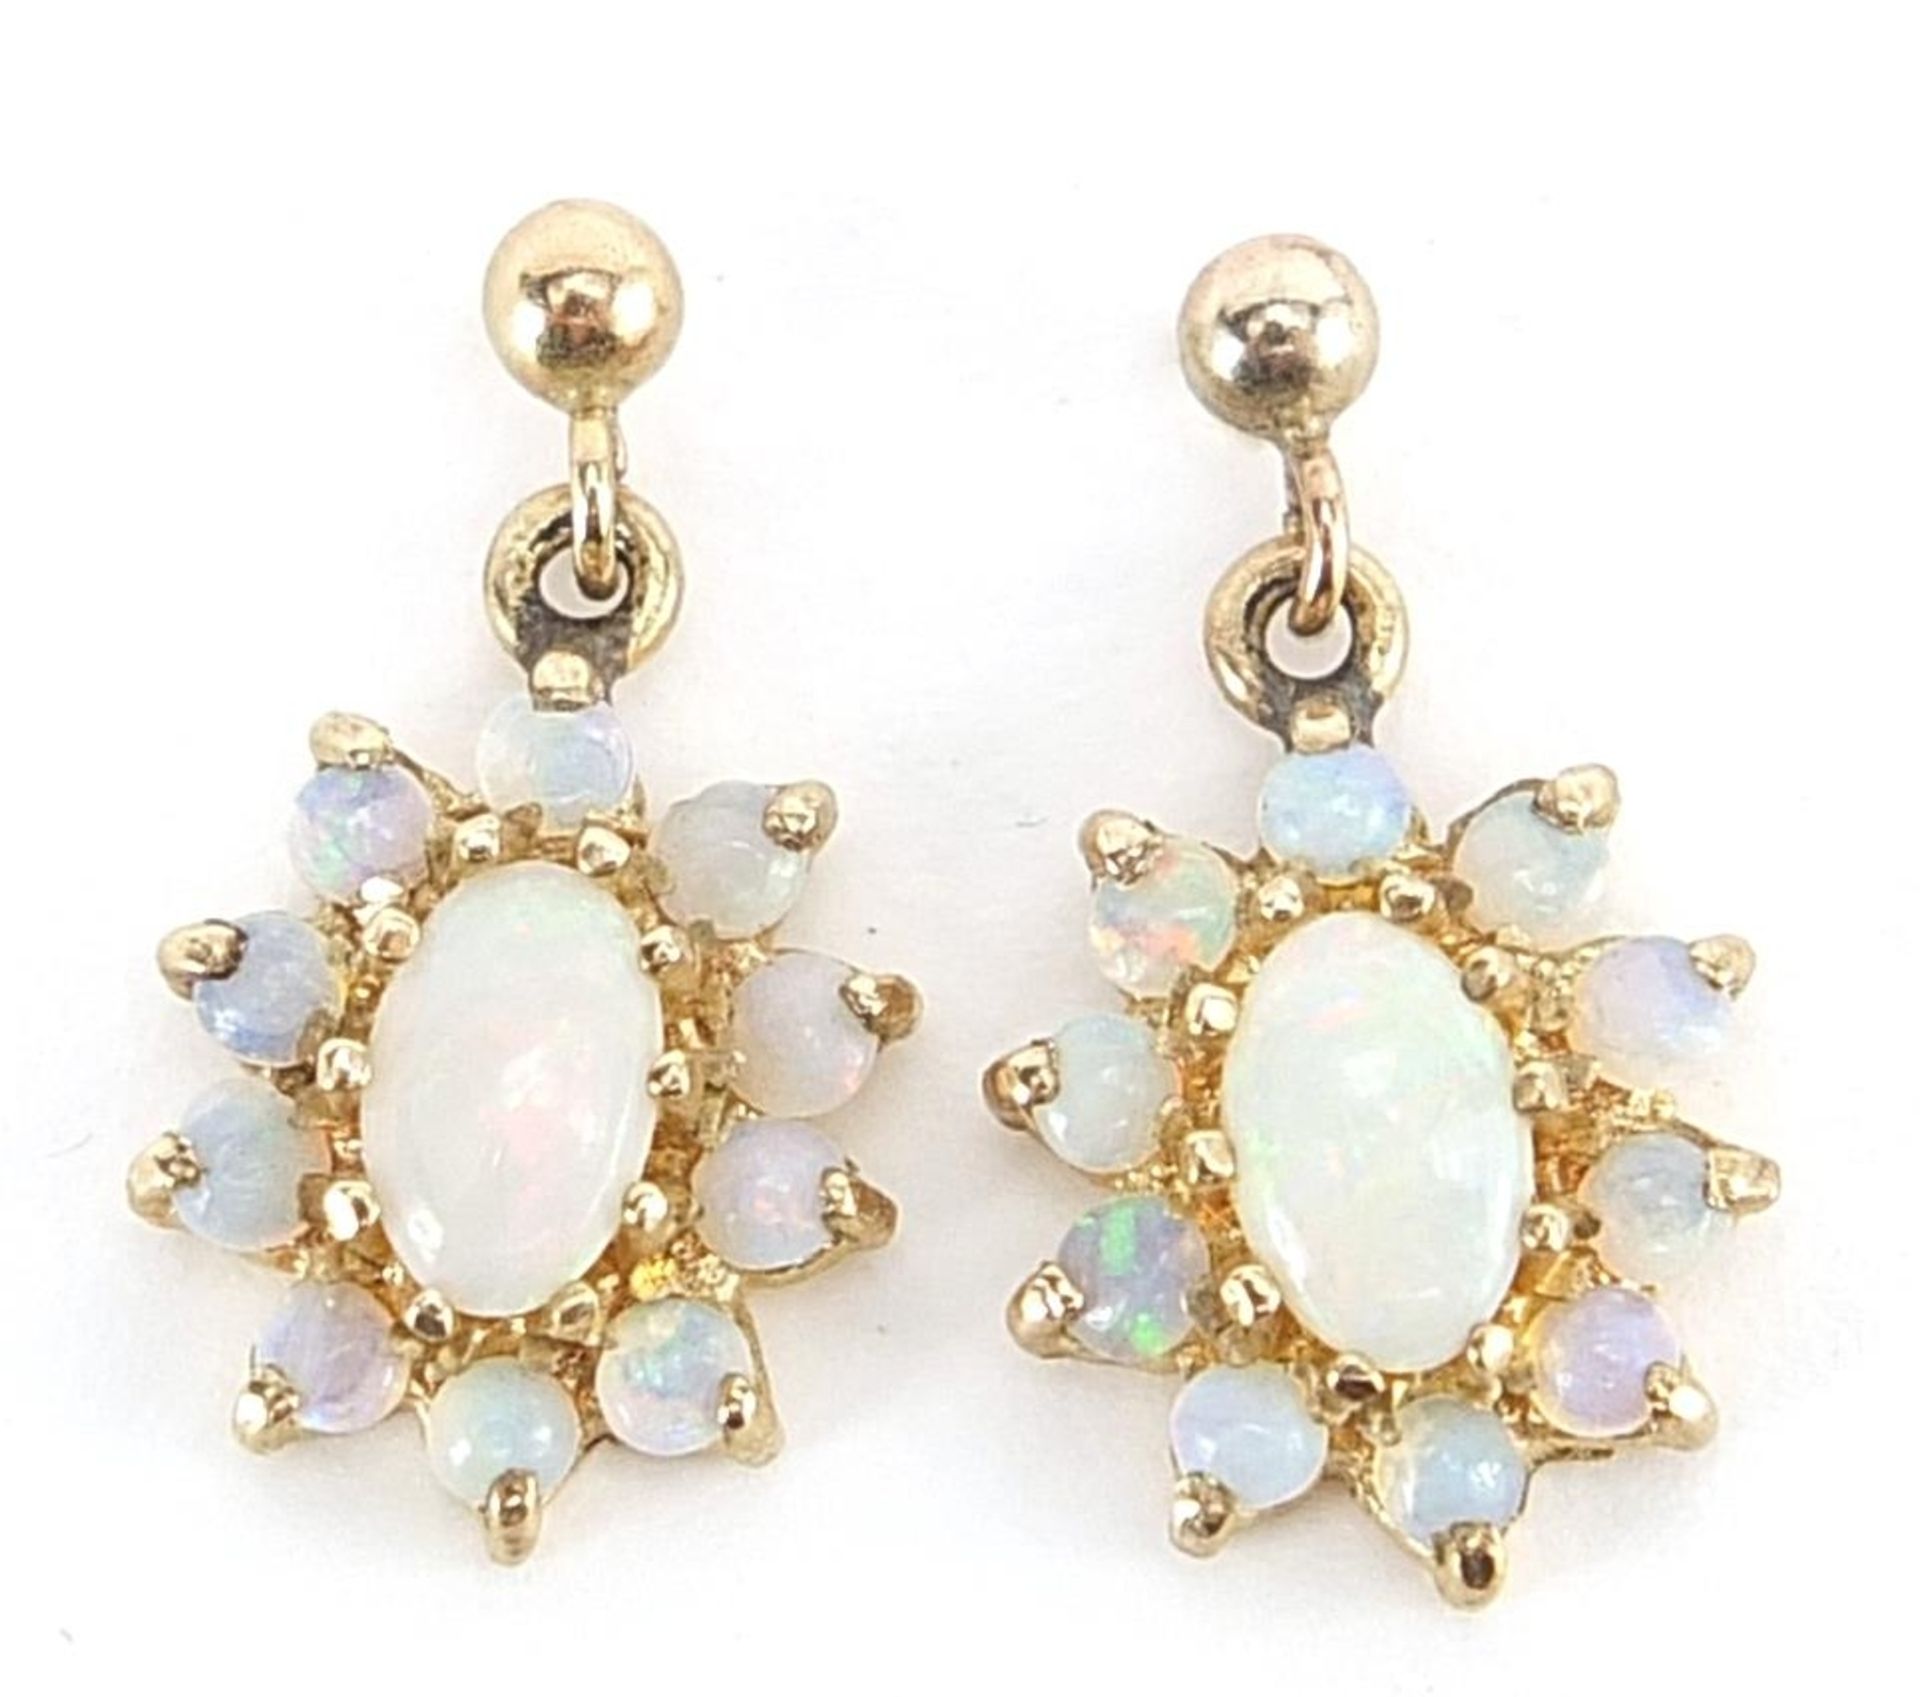 Pair of 9ct gold opal drop earrings, 1.5cm high, 1.4g